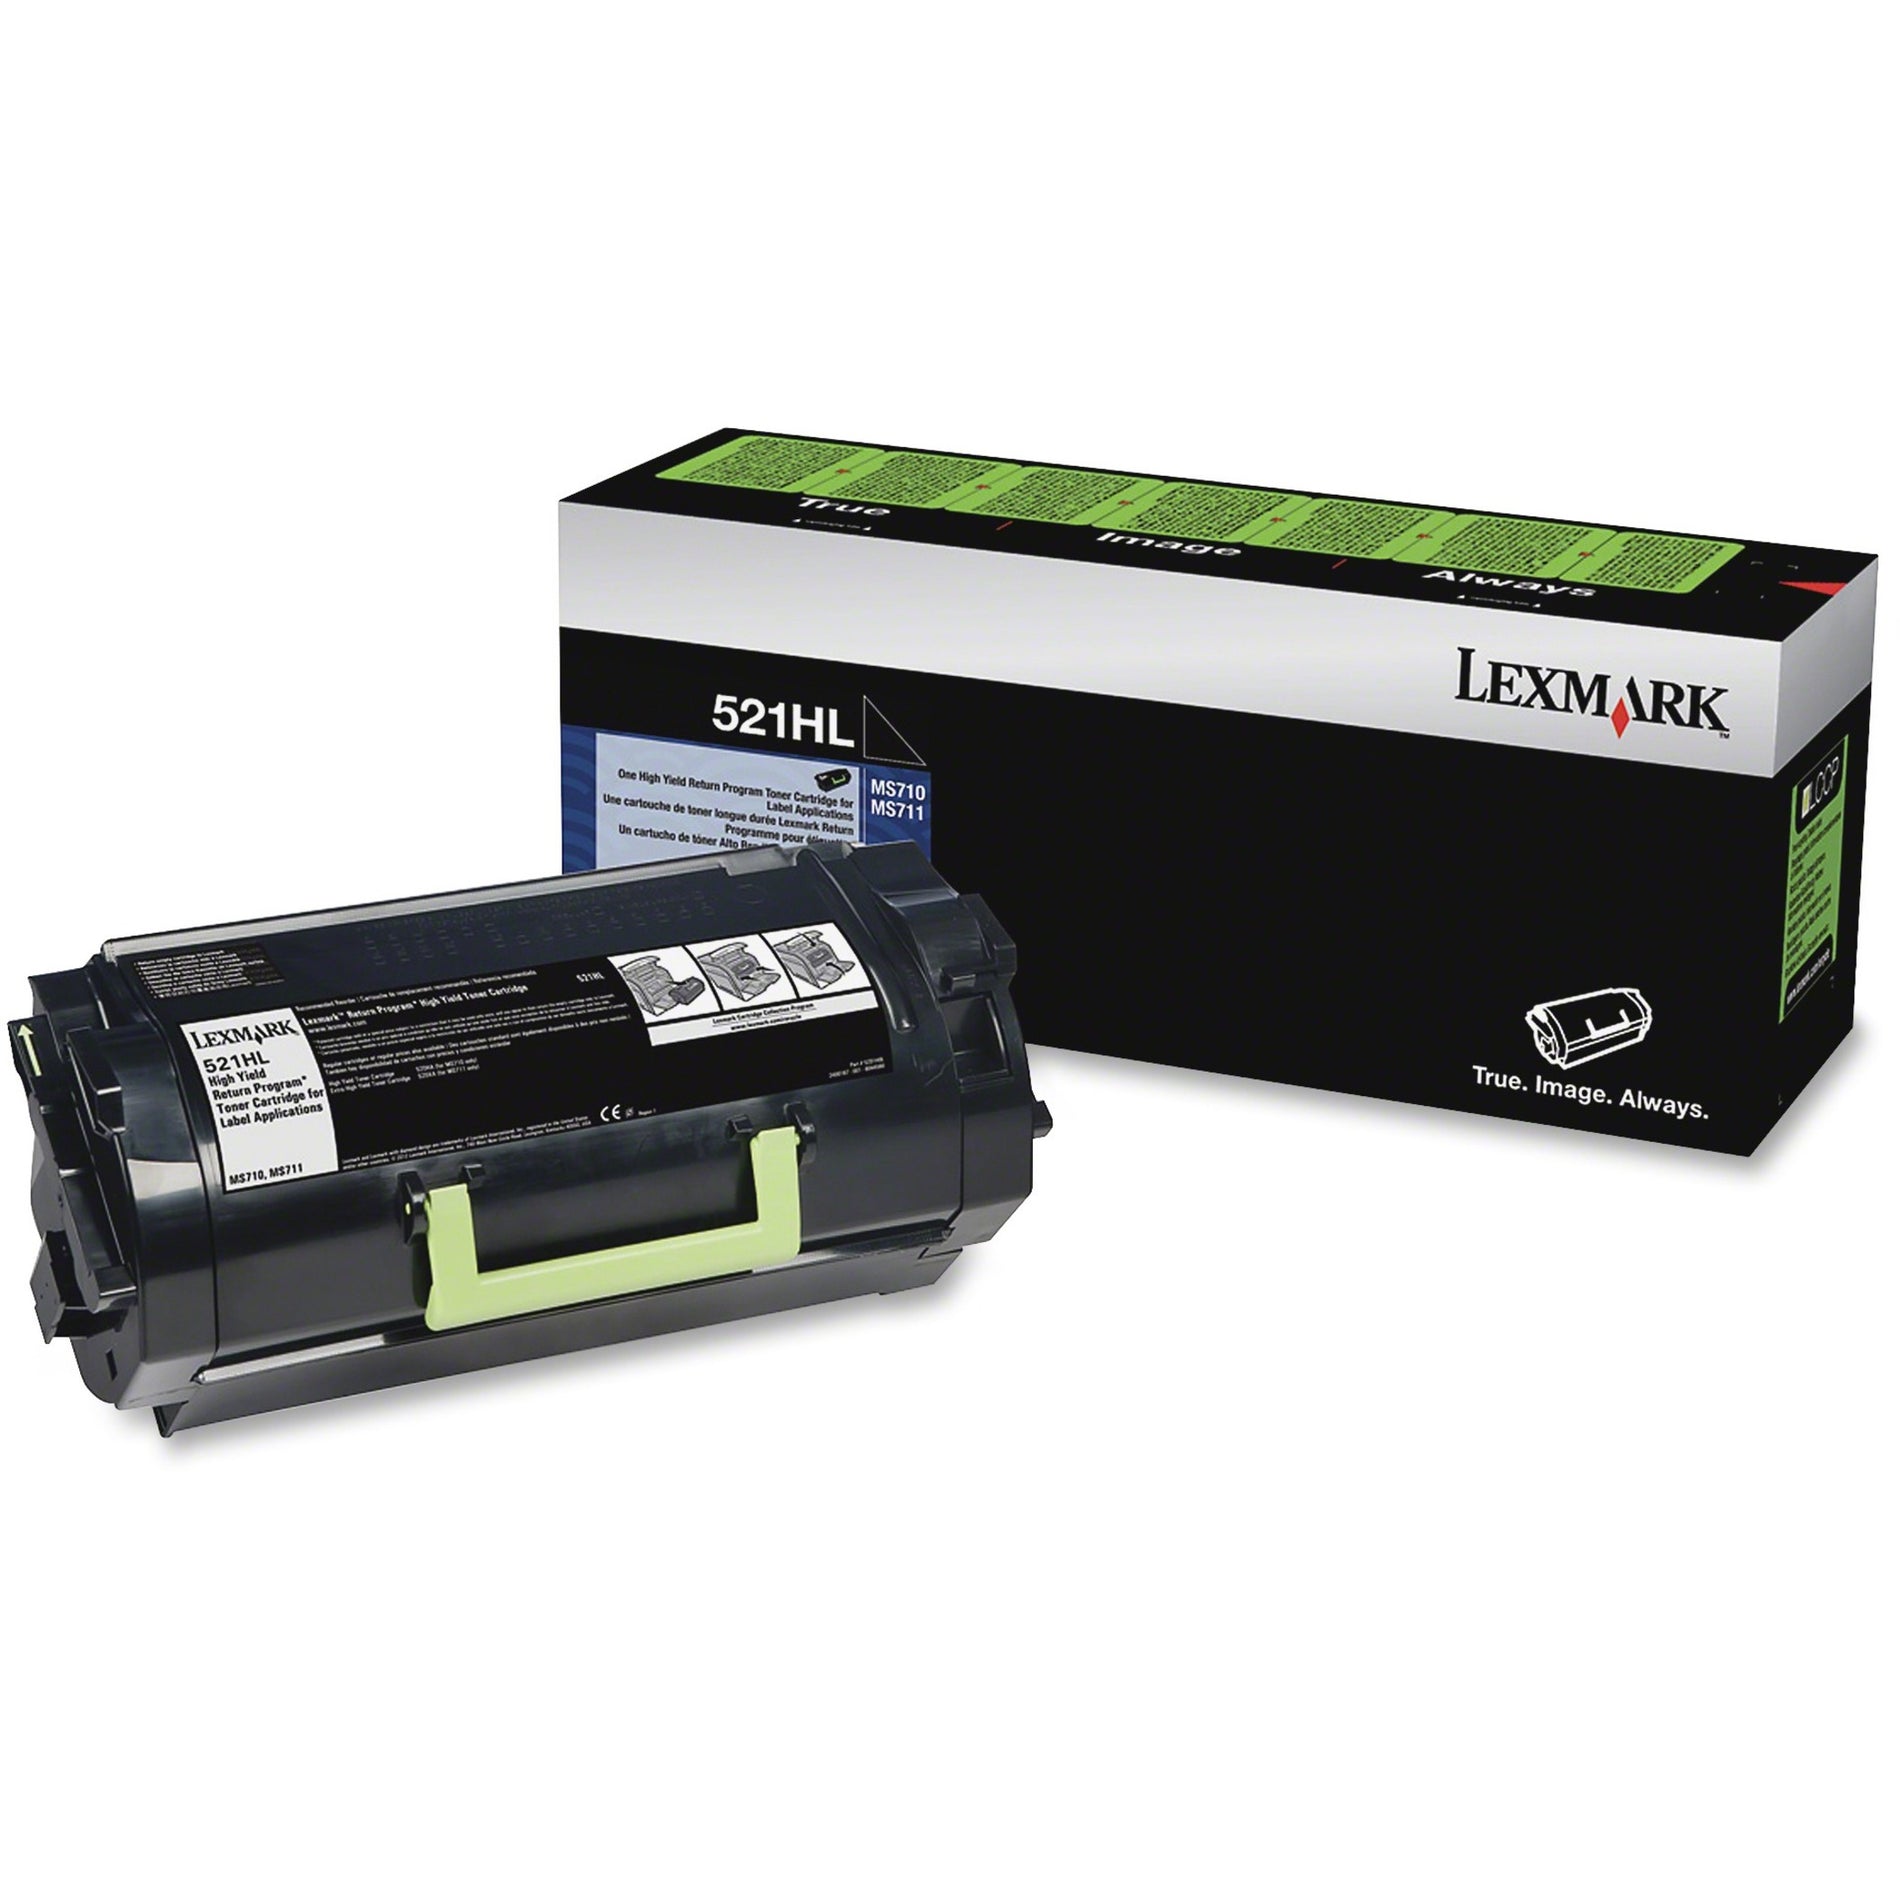 Lexmark 52D1H0L 521HL Return Program Toner Cartridge, High Yield, Black, 25000 Pg Yield